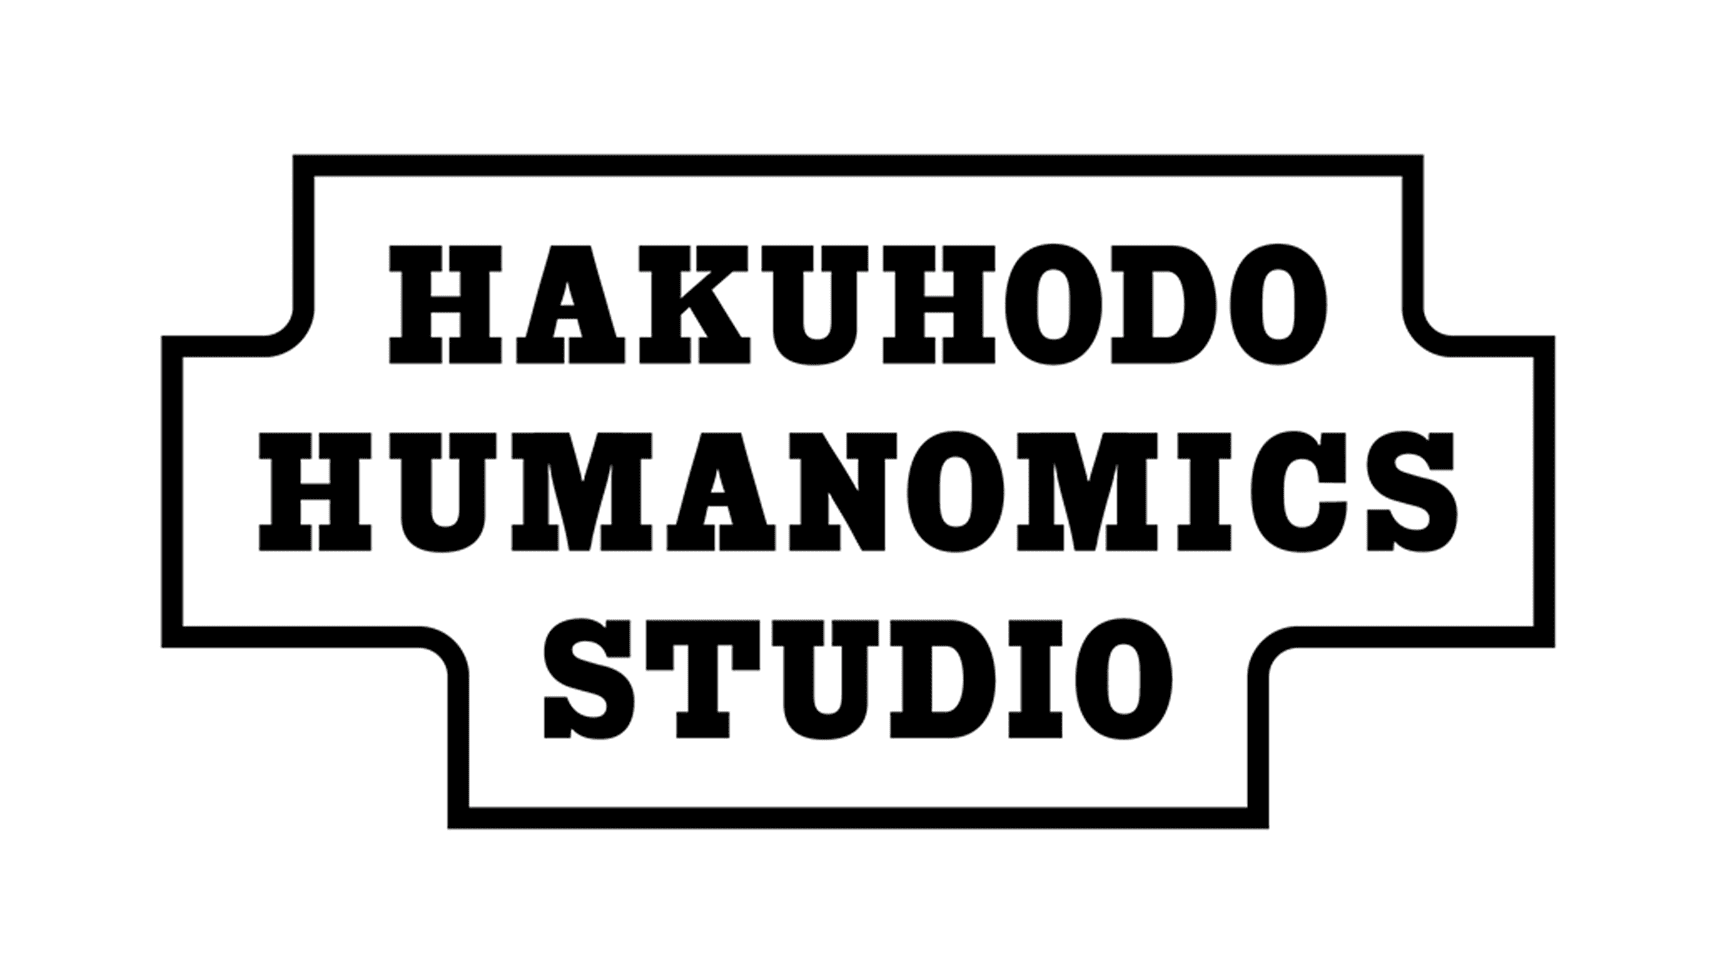 HAKUHODO Humanomics Studio